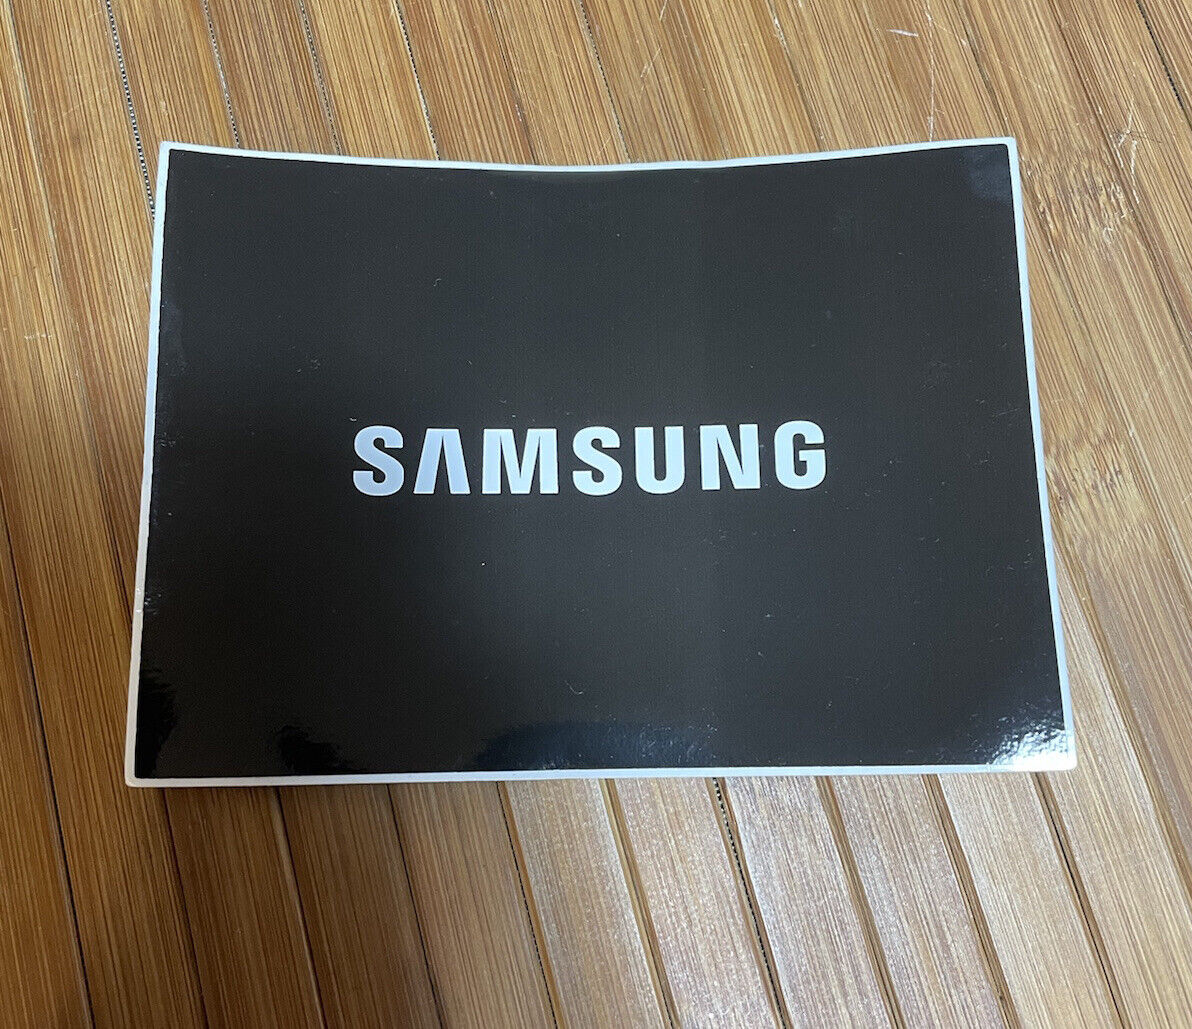 Samsung 5.5 x 4 Inch Vinyl Decal Slap Sticker Black/White Logo NOS Phone Tablet